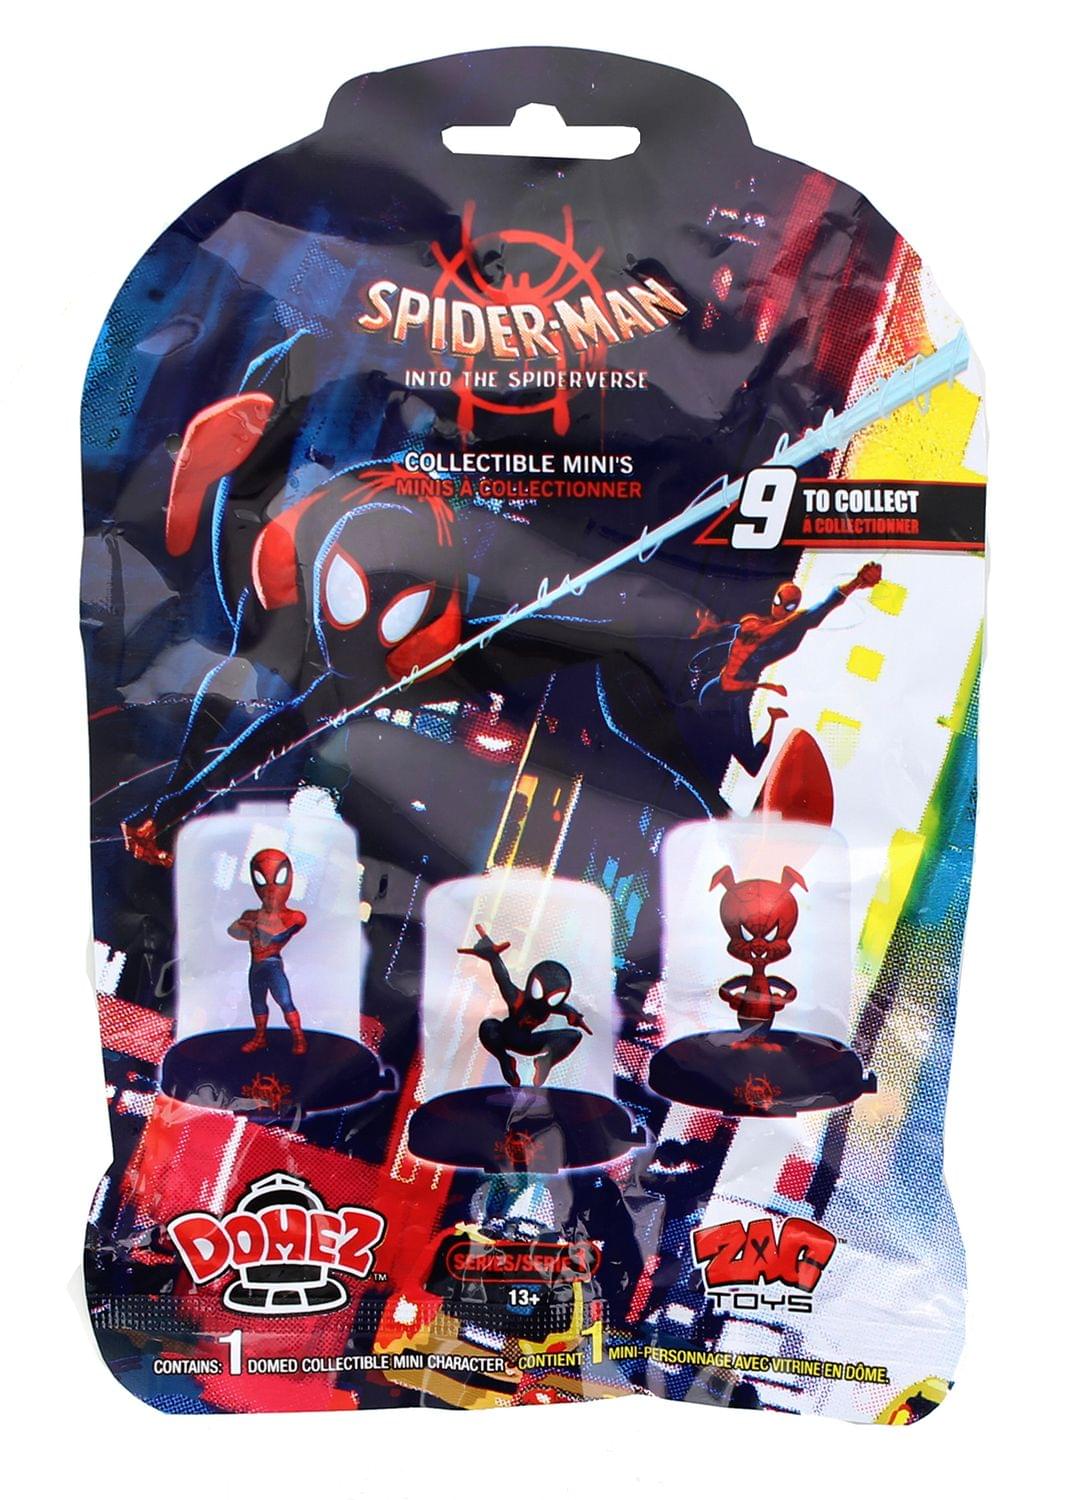 Marvel Spider-Man Spiderverse Domez Collectible Figure - One Random